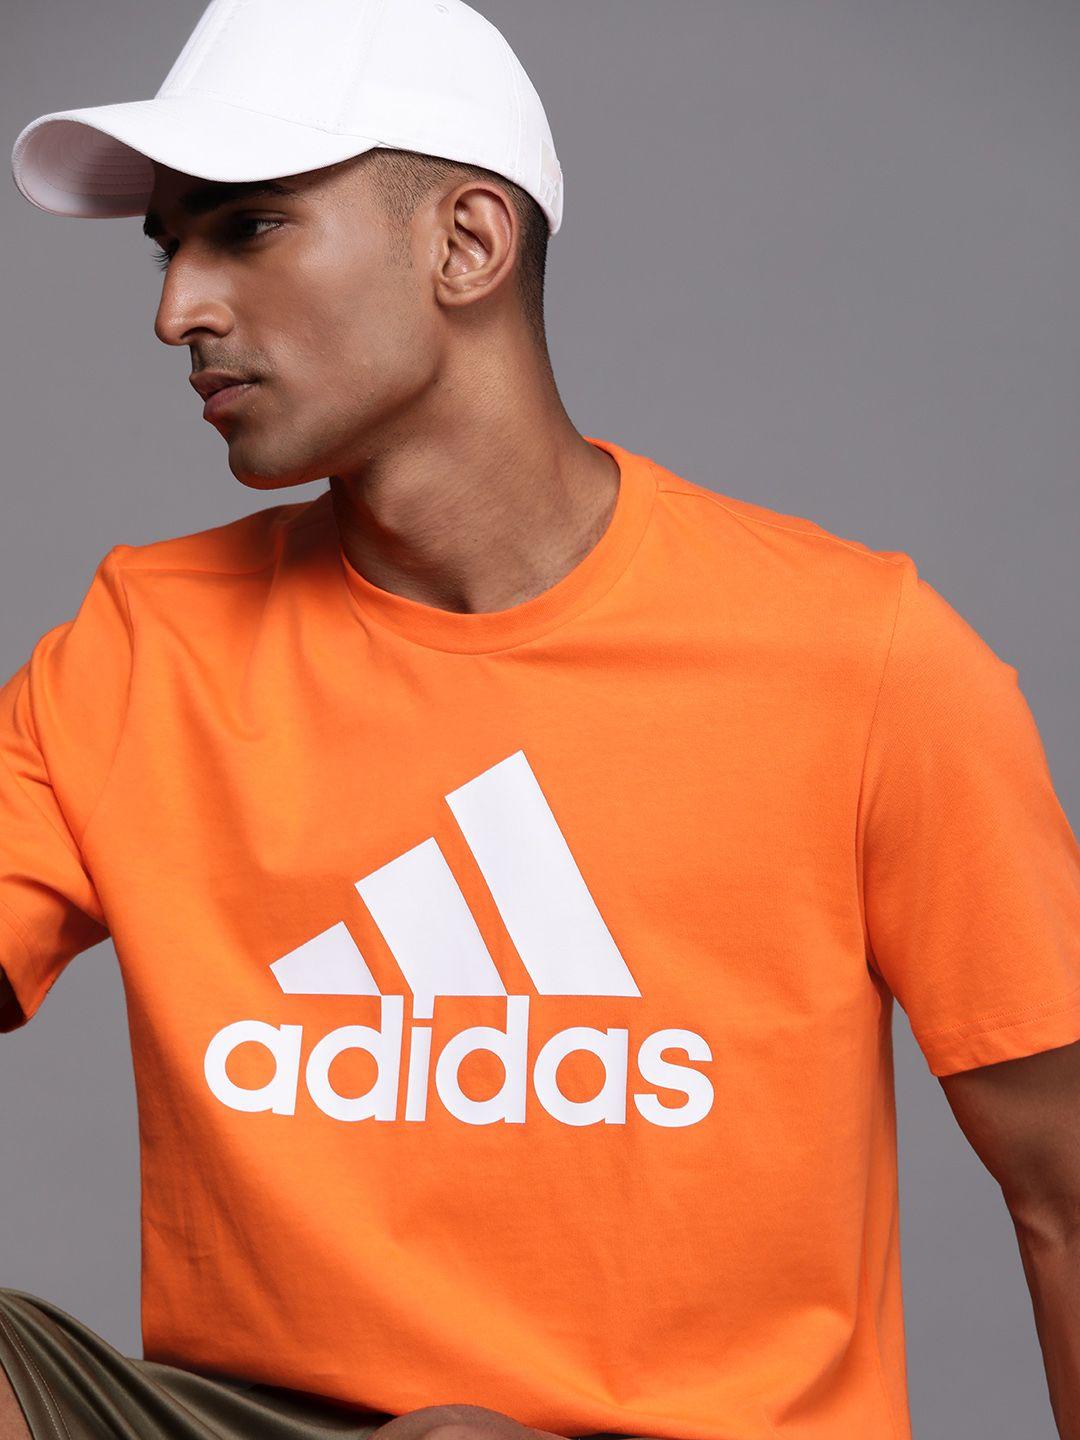 adidas men in smu brand logo printed pure cotton t-shirt